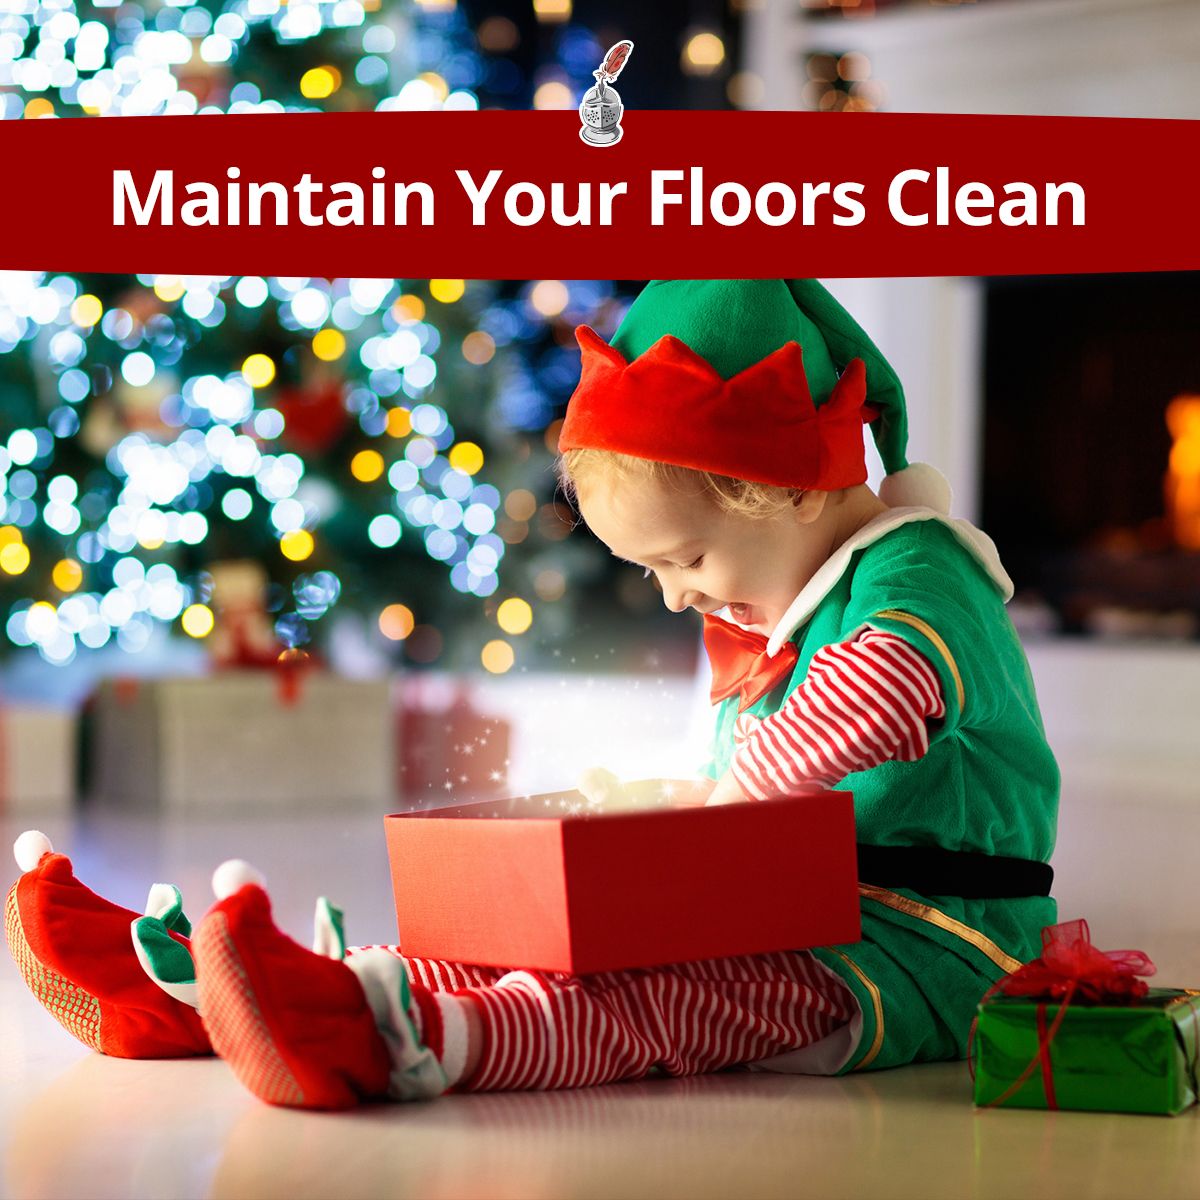 Maintain Your Floors Clean